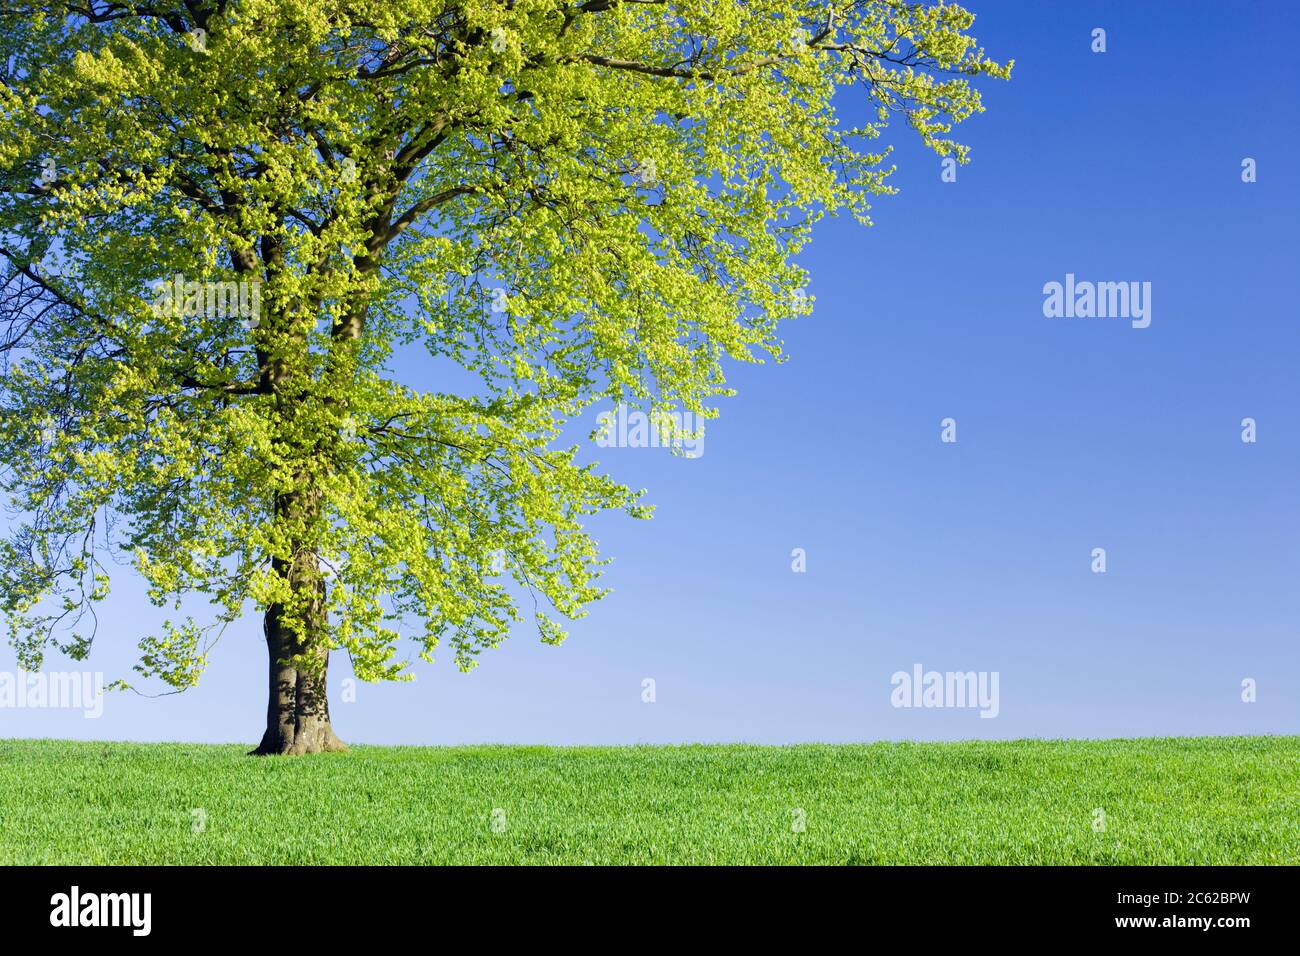 Single beech tree in field of young crop. Surrey, UK. Stock Photo